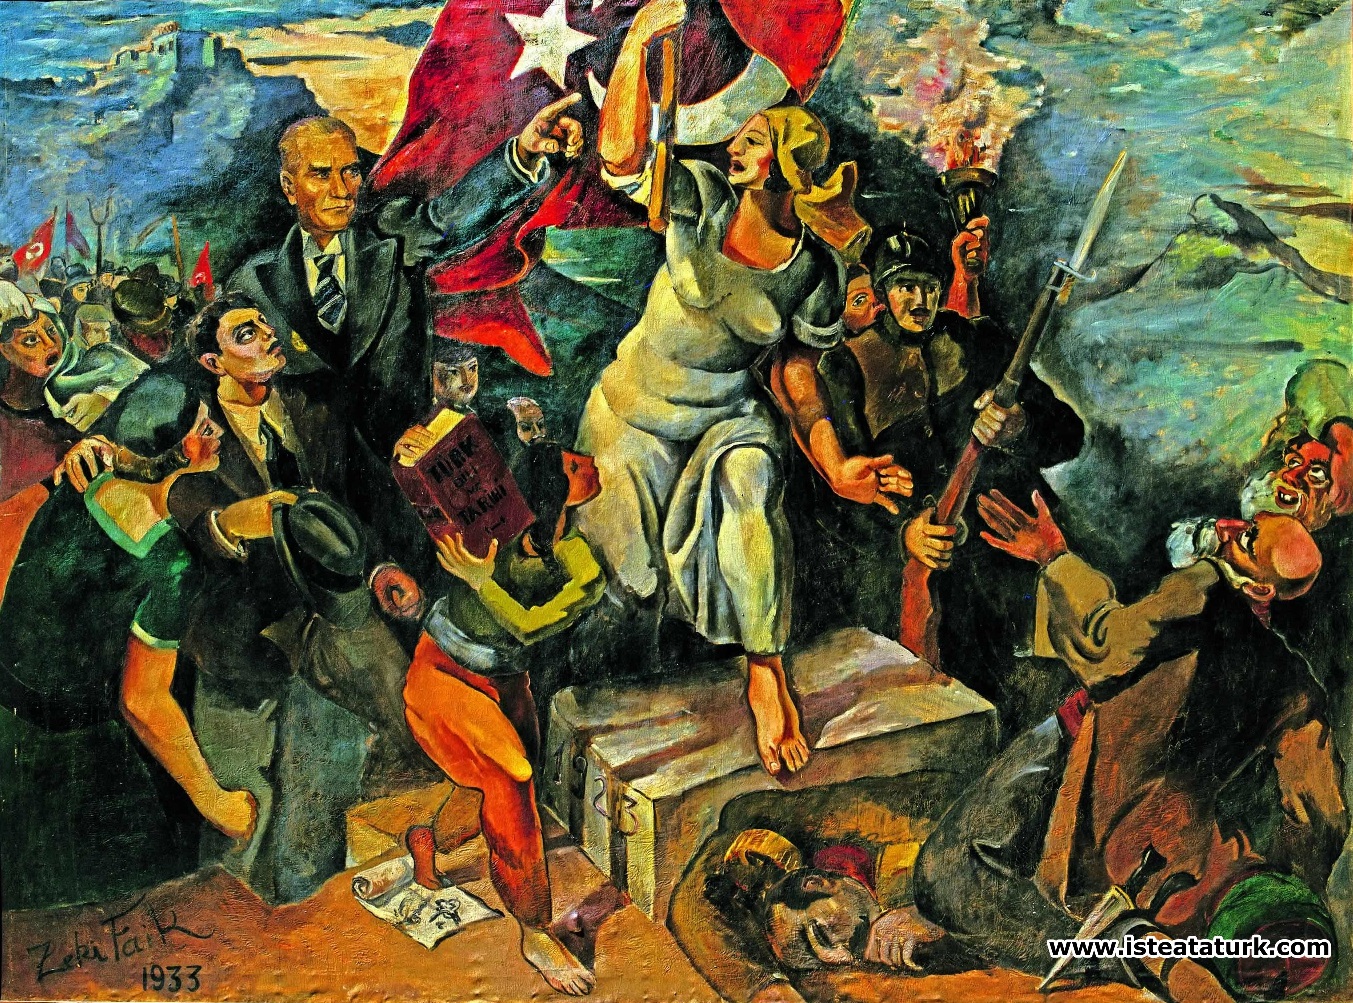 Zeki Faik Izer, On the Road to Revolution, 1933